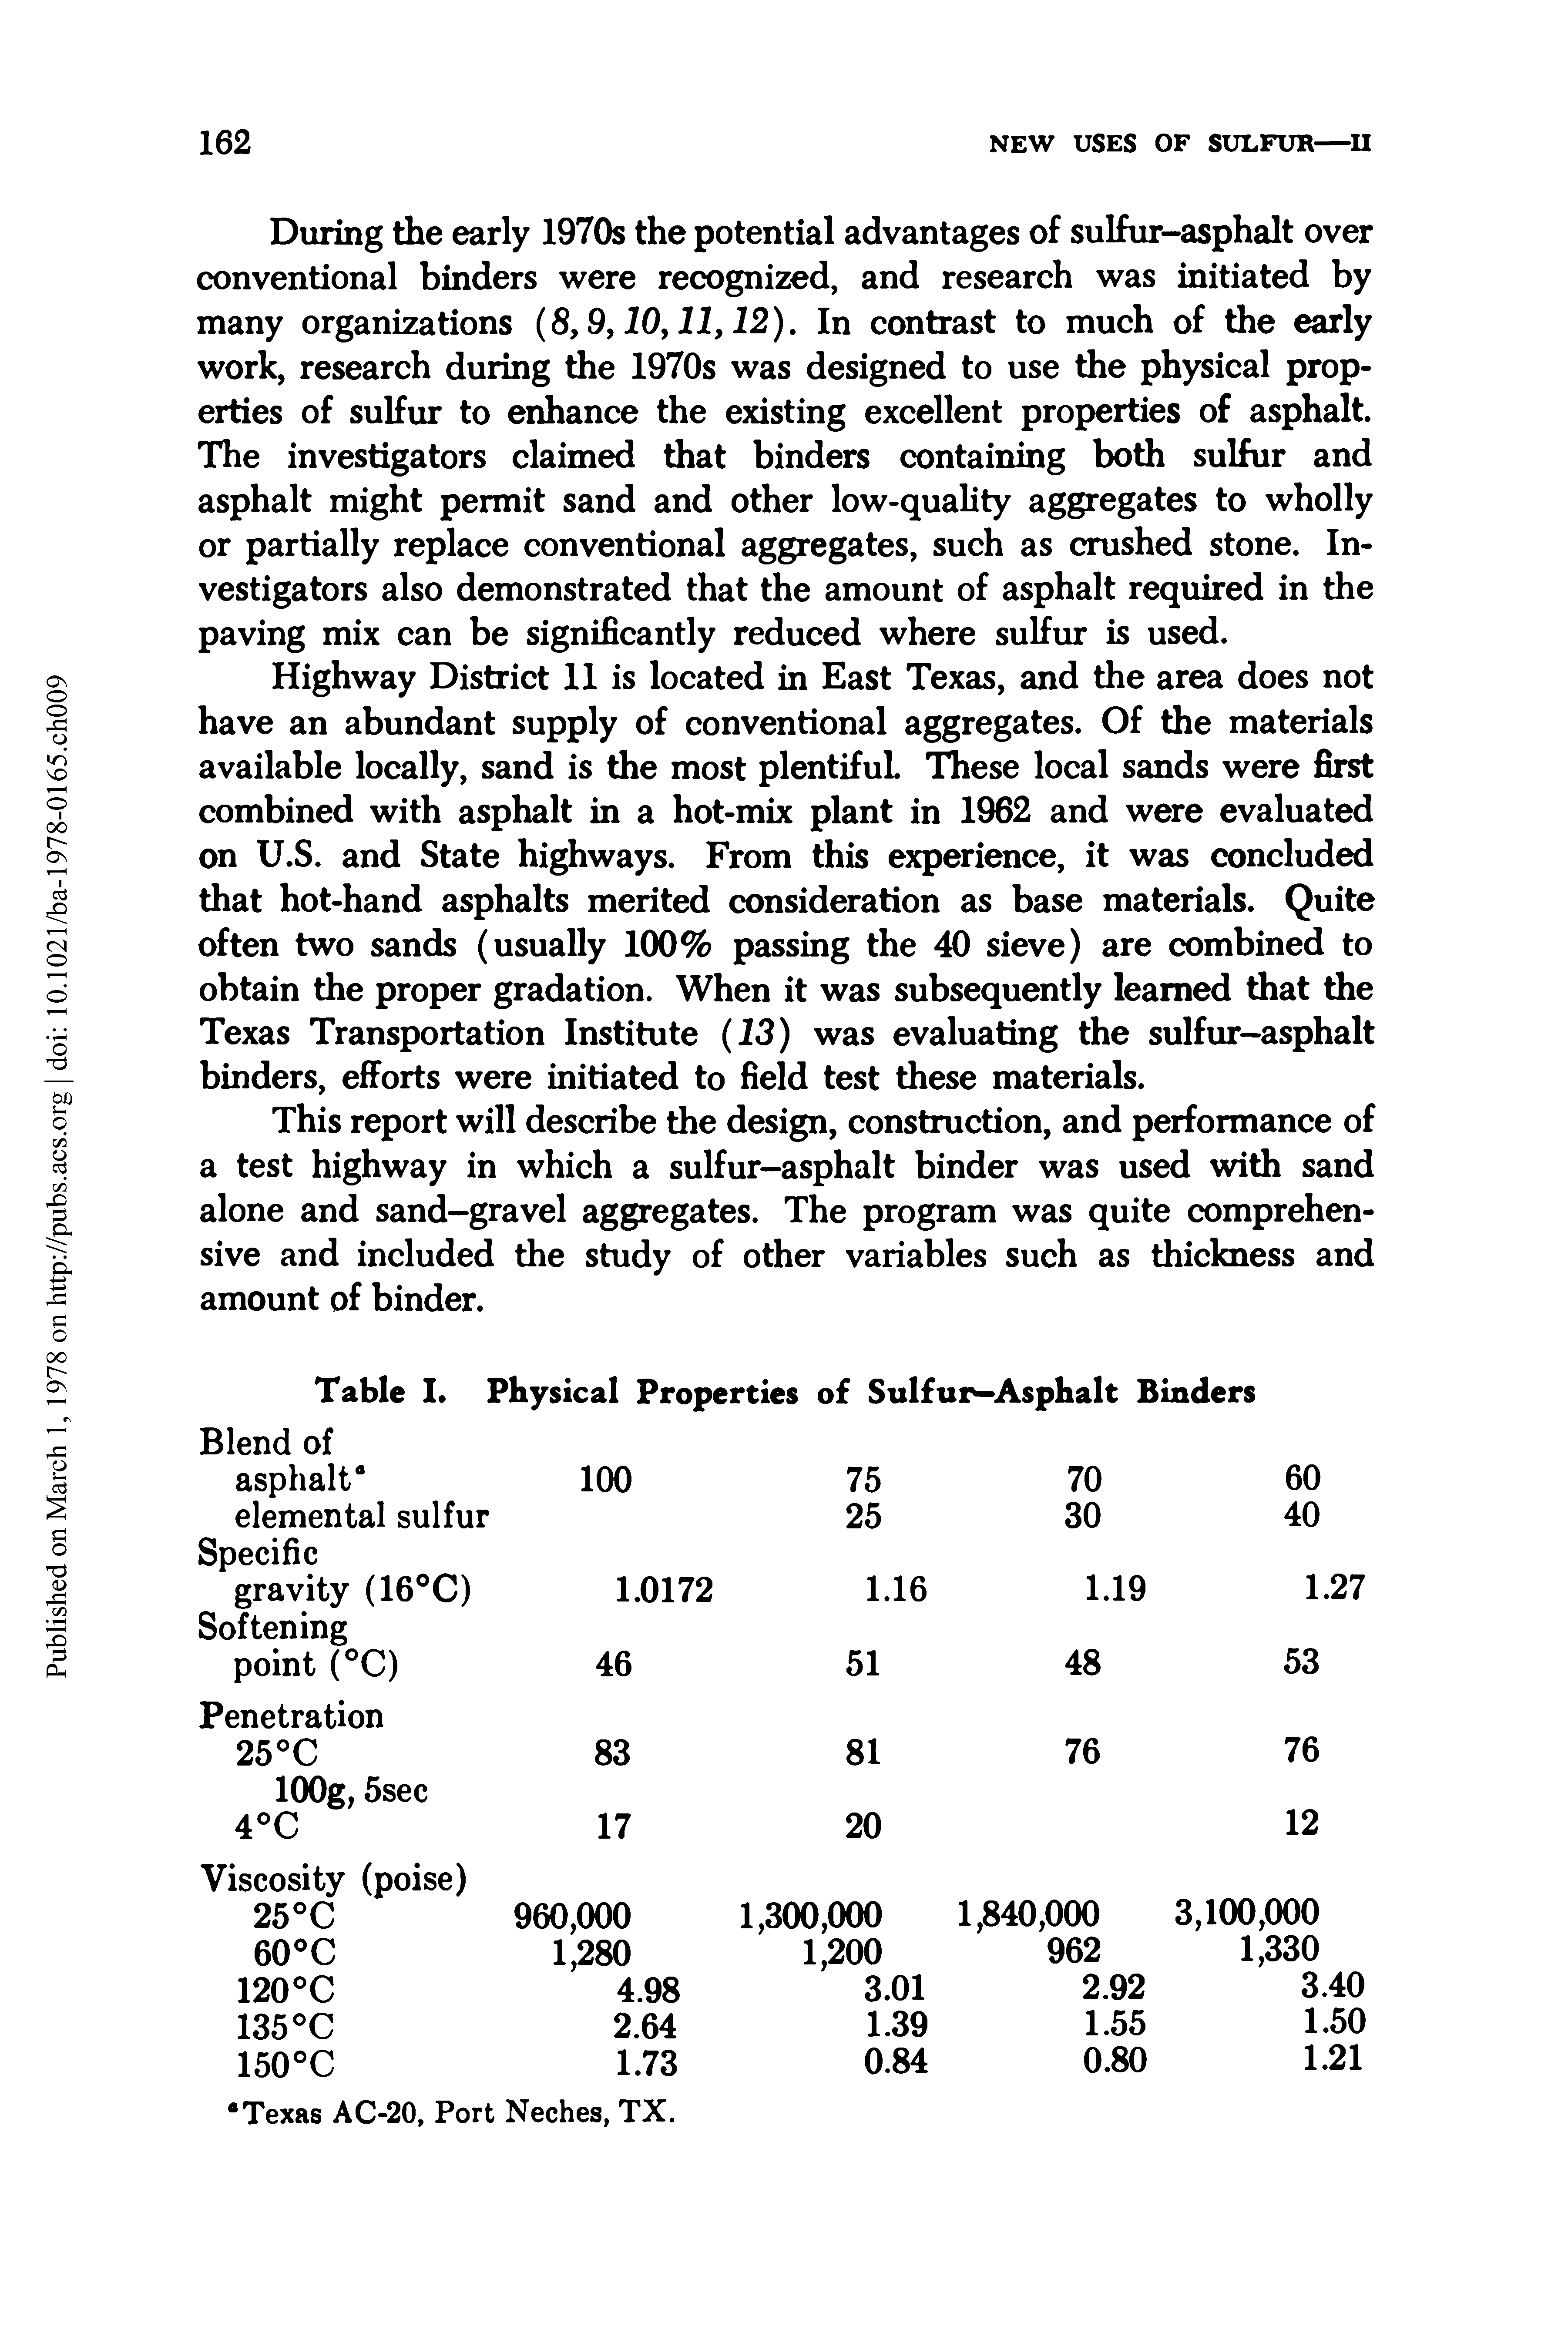 Table I. Physical Properties of Sulfur-Asphalt Binders...